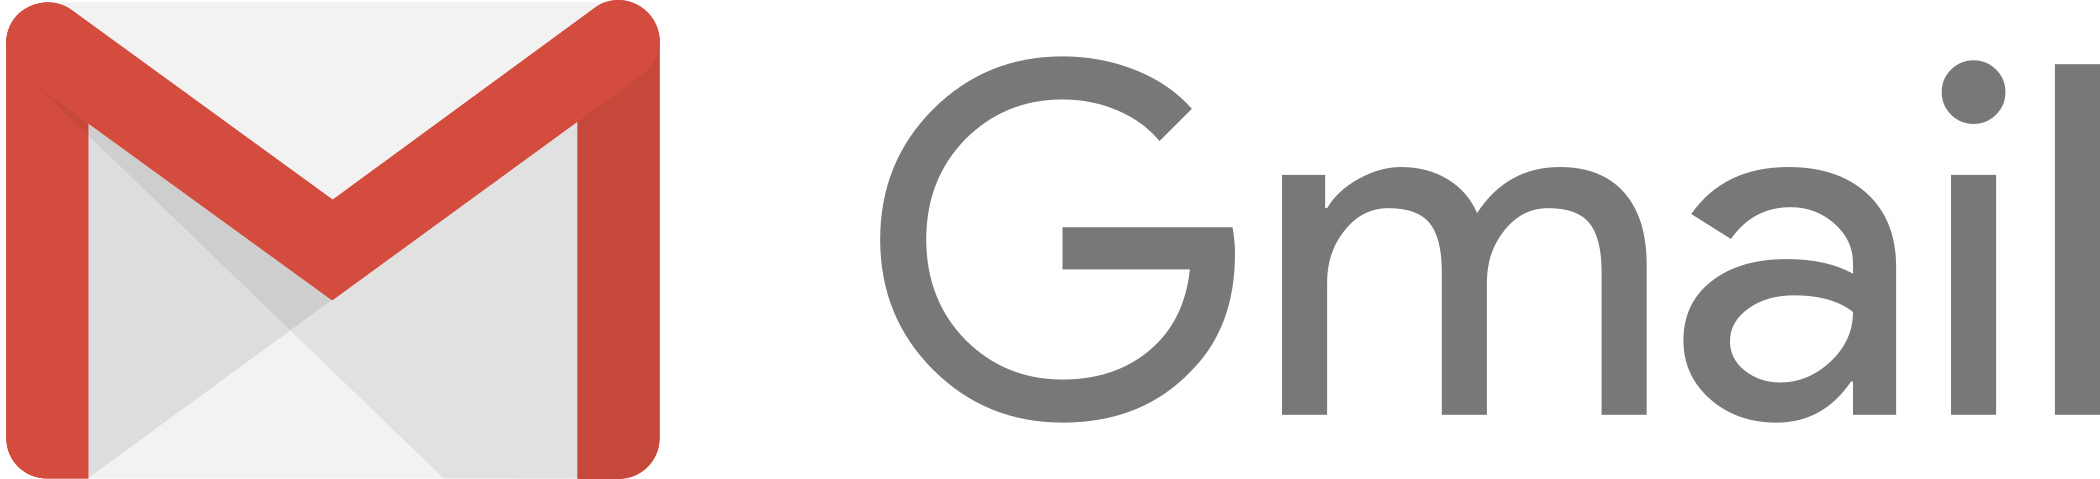 Gmail Logo.